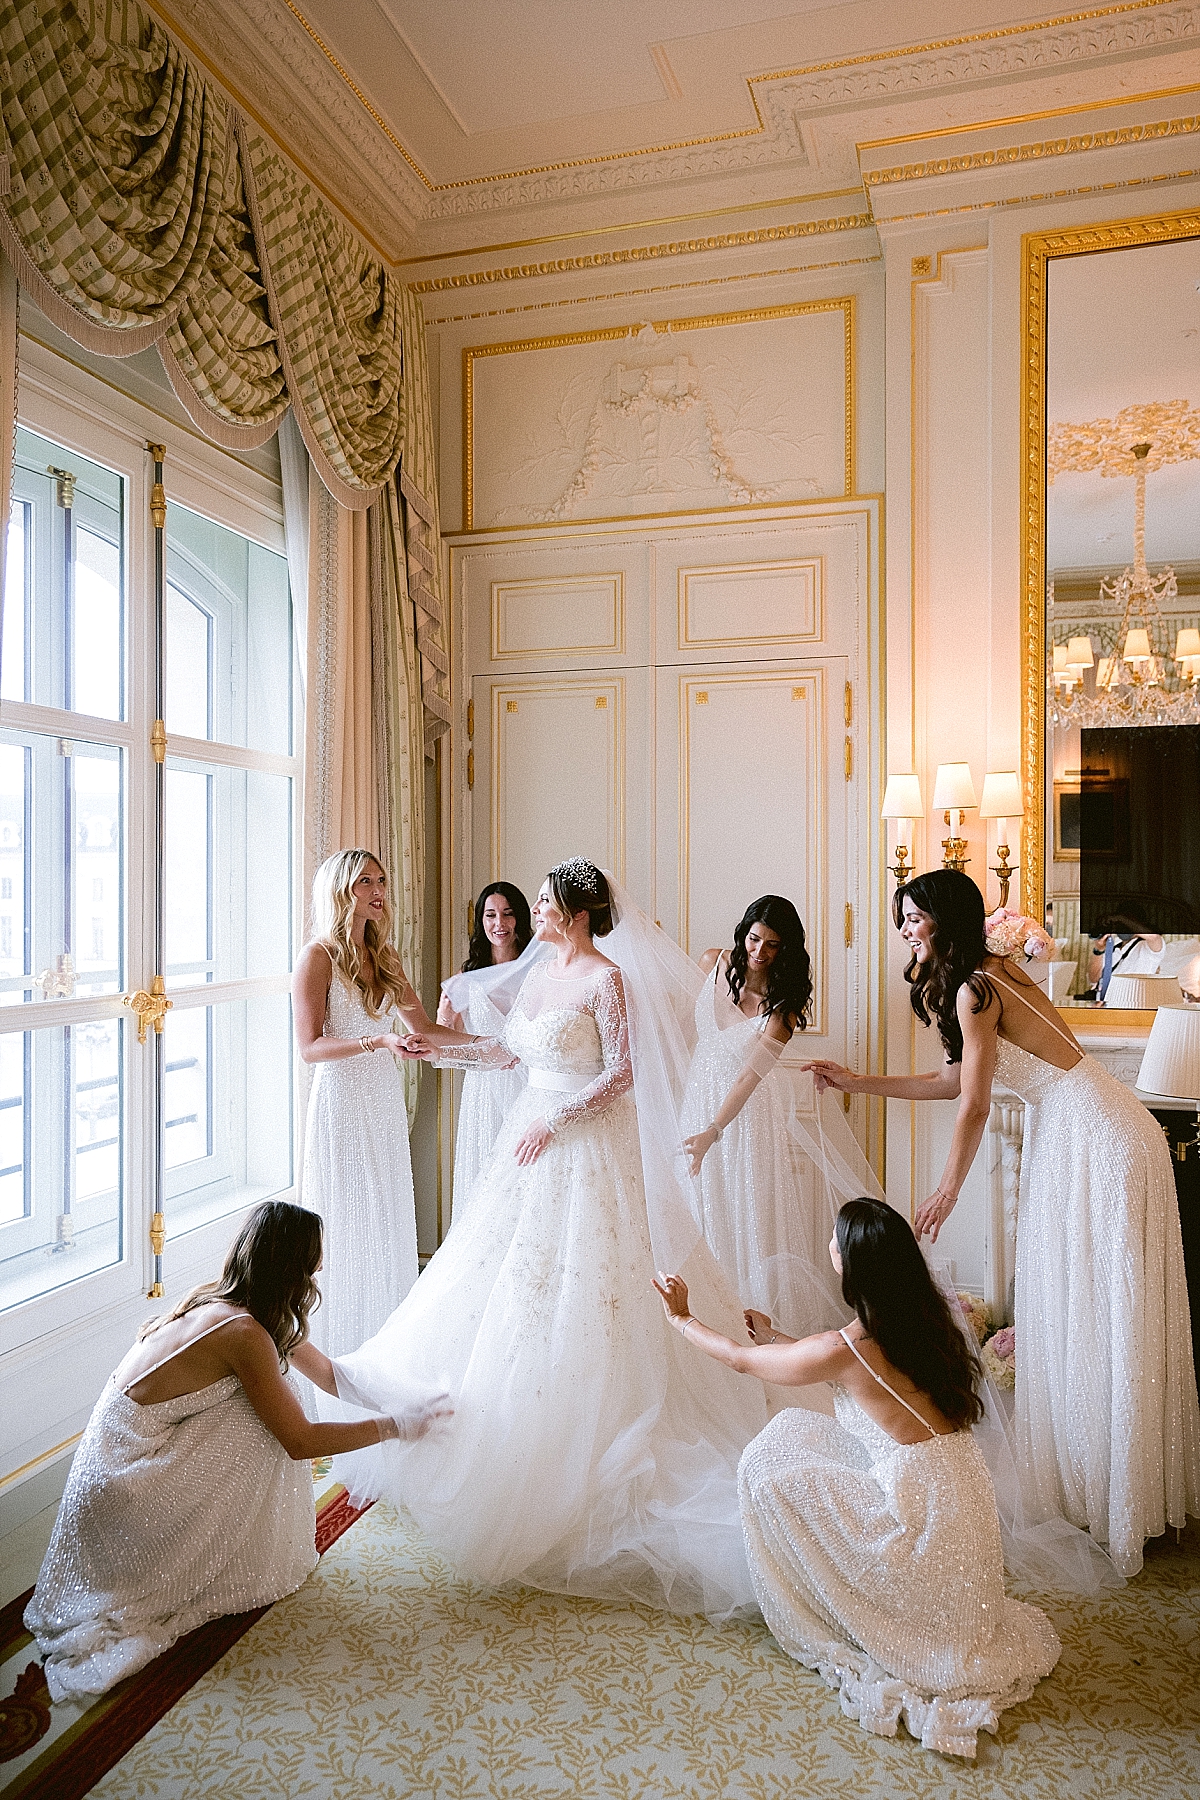 Ritz Paris wedding - get married in Paris in this famous wedding hotel